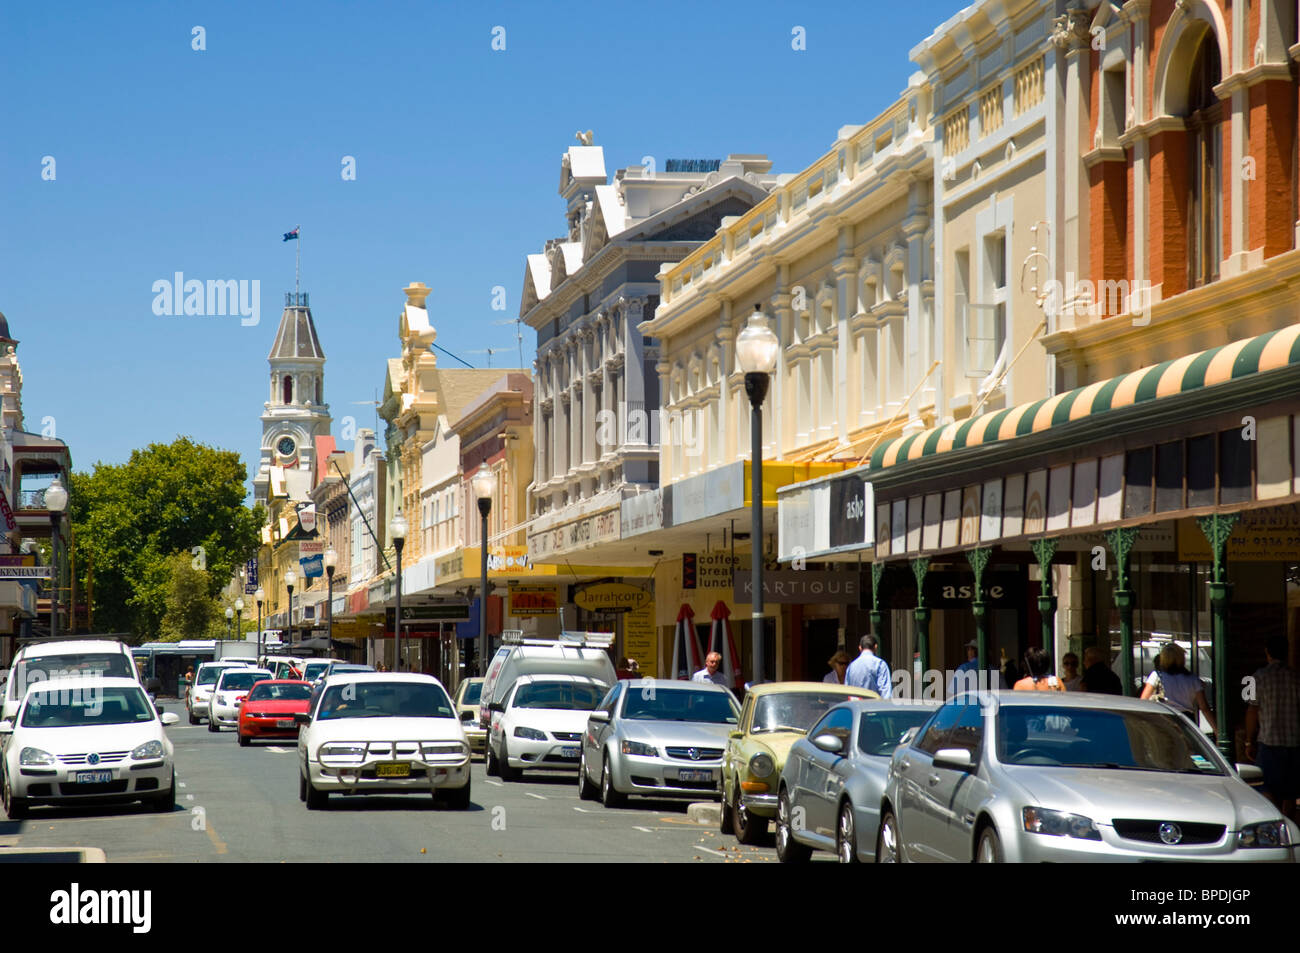 Historic buildings on High Street, Fremantle, Western Australia. Stock Photo